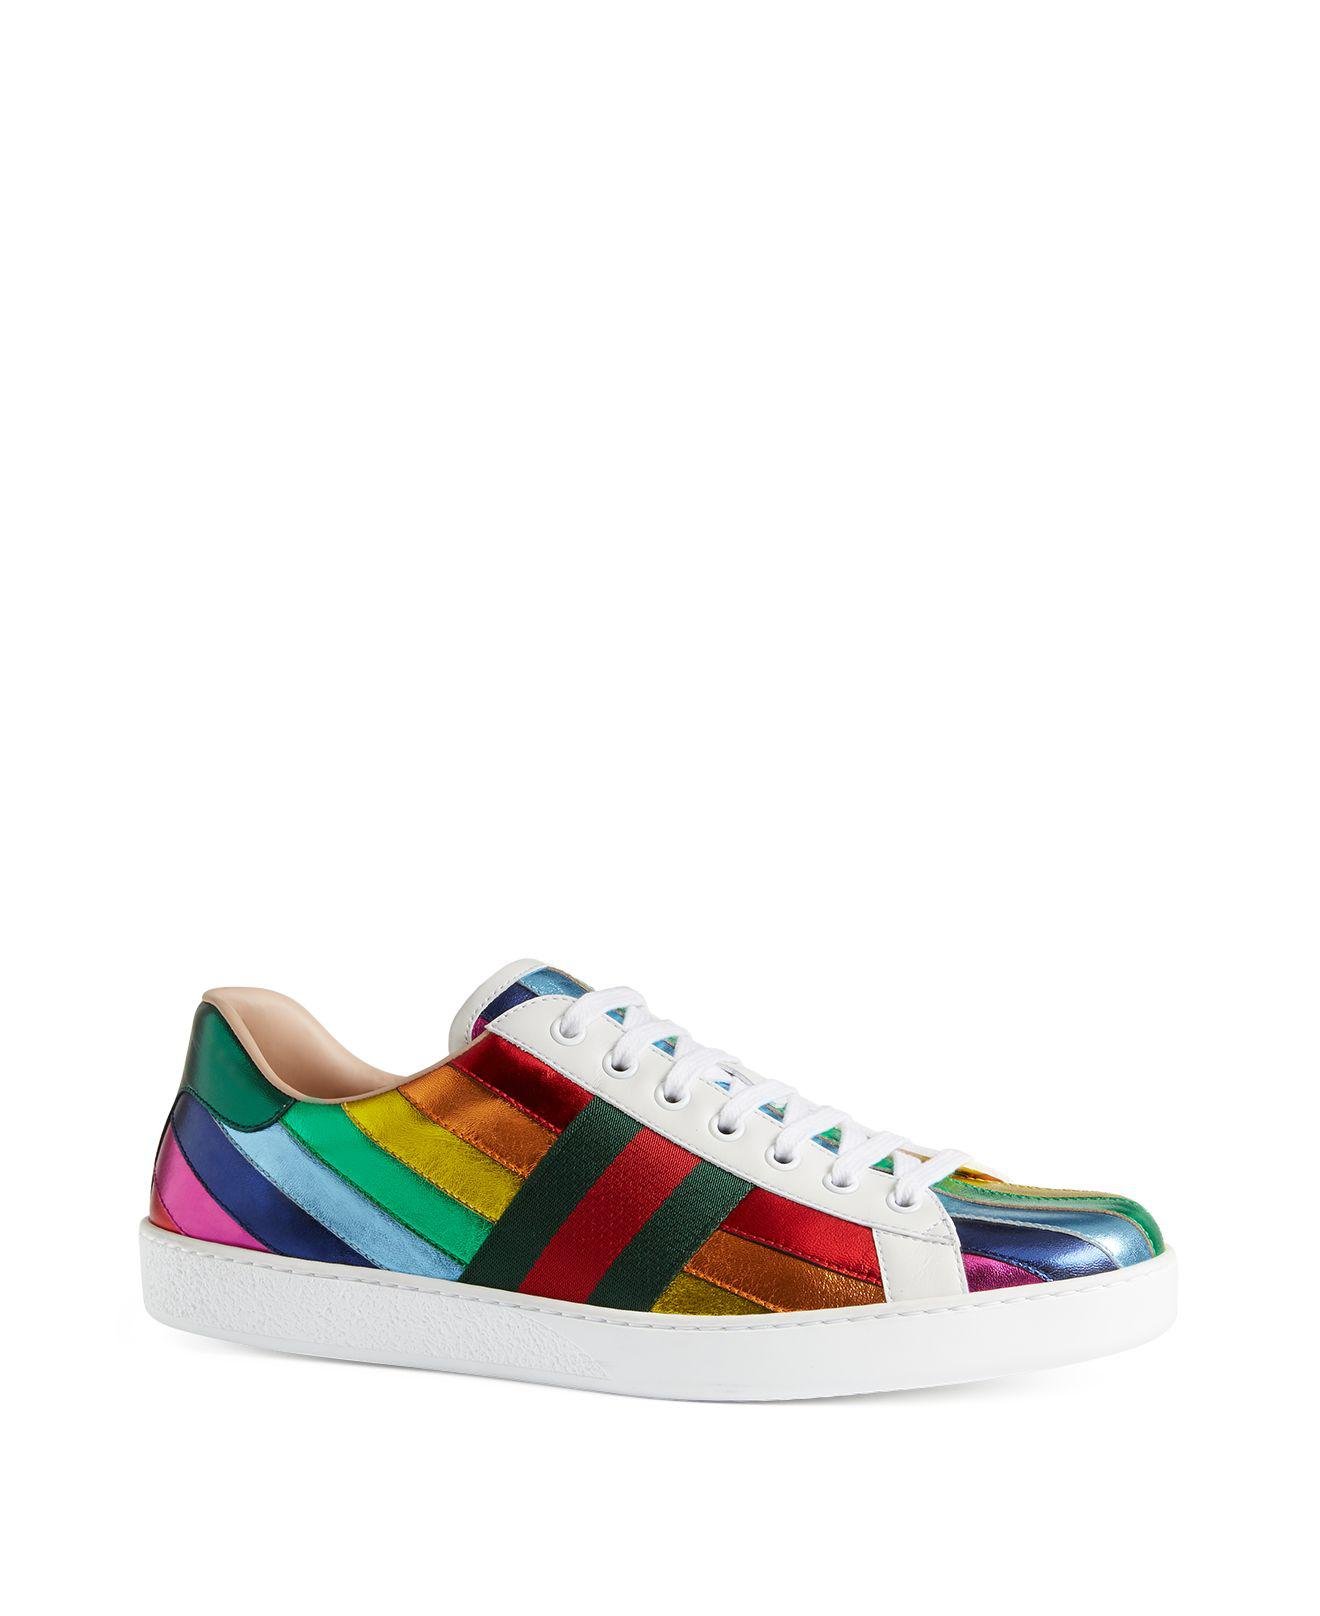 rainbow metallic shoes